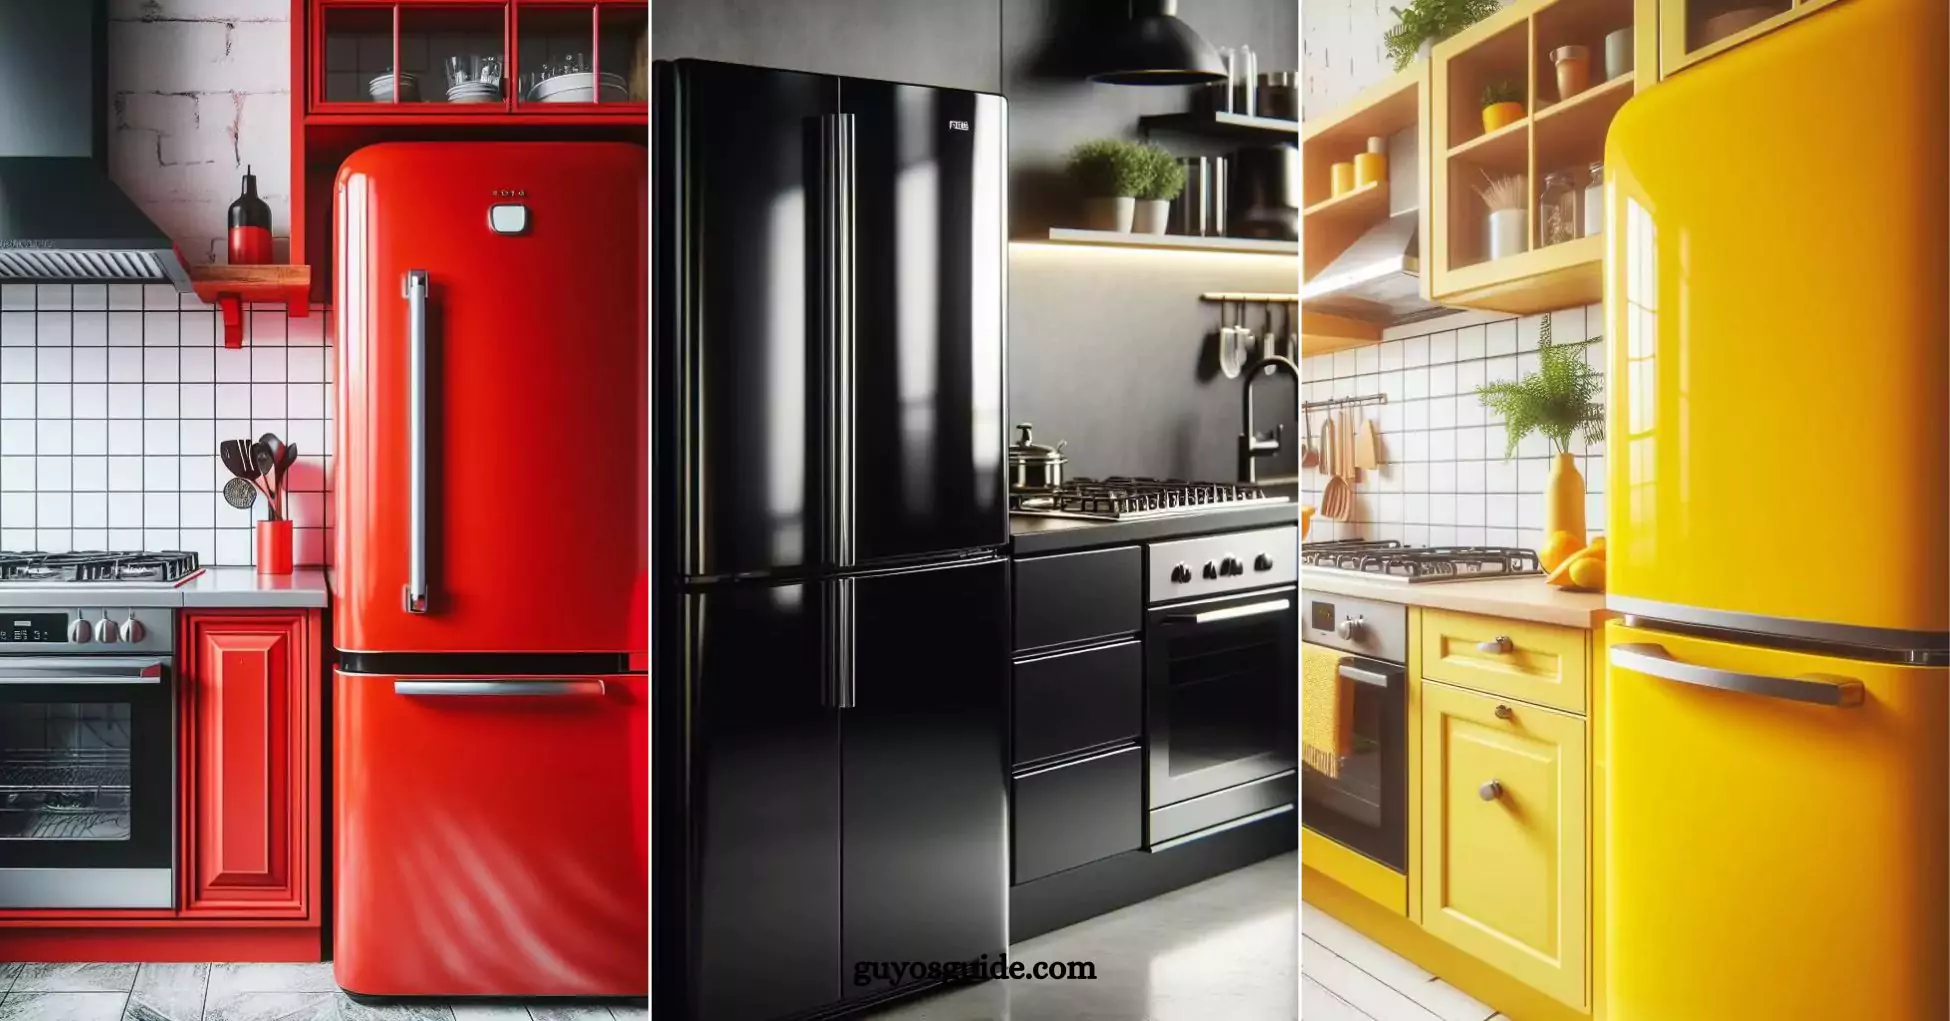 fridge color ideas - featured image